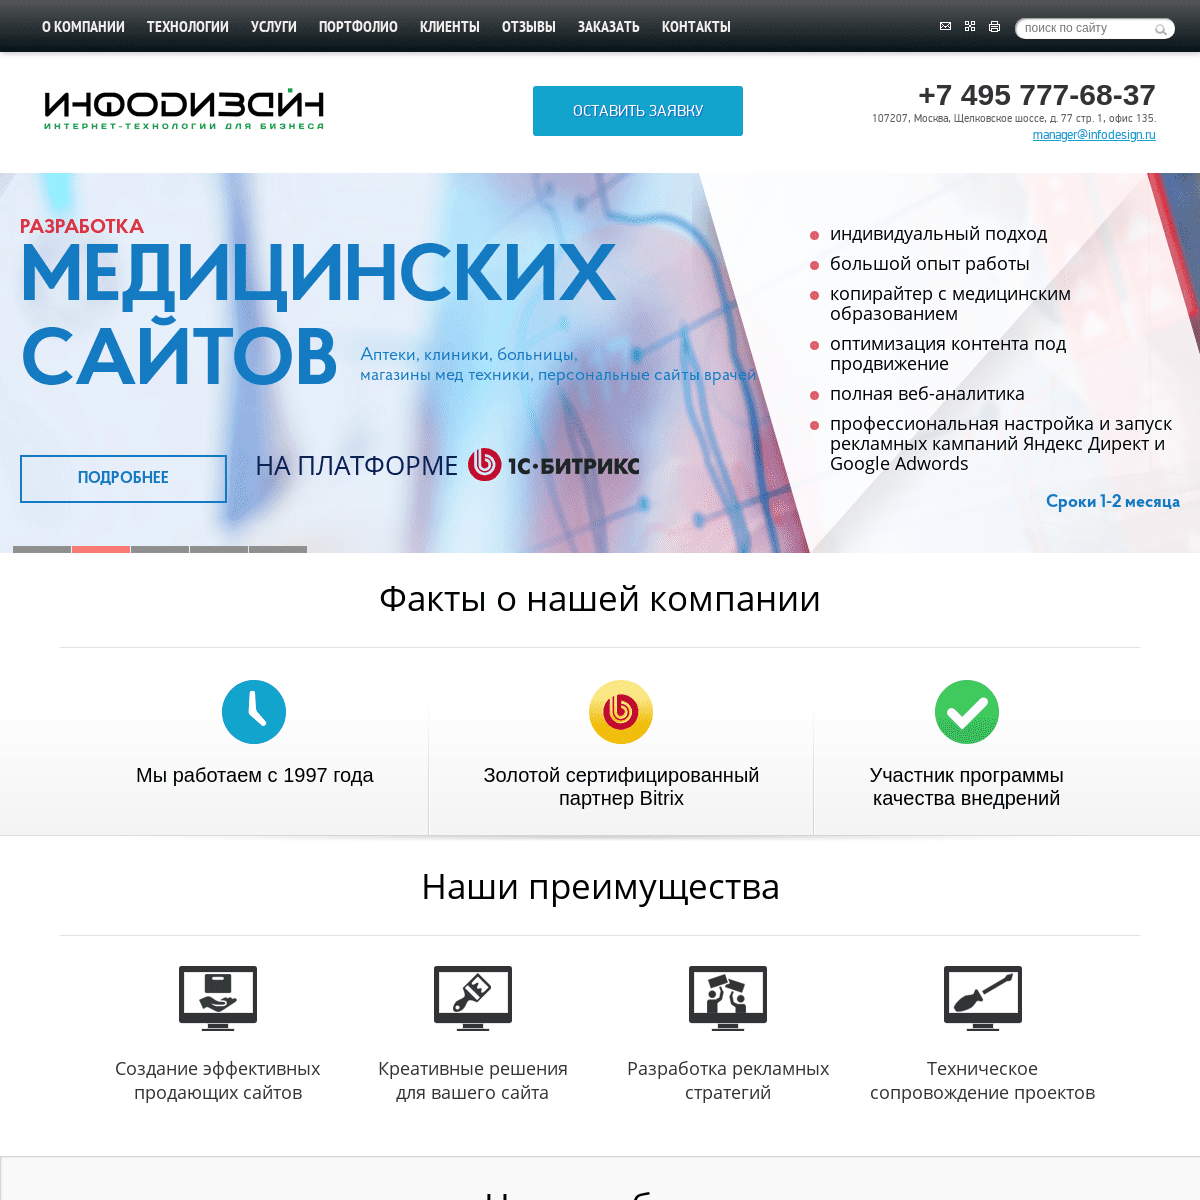 A complete backup of https://infodesign.ru